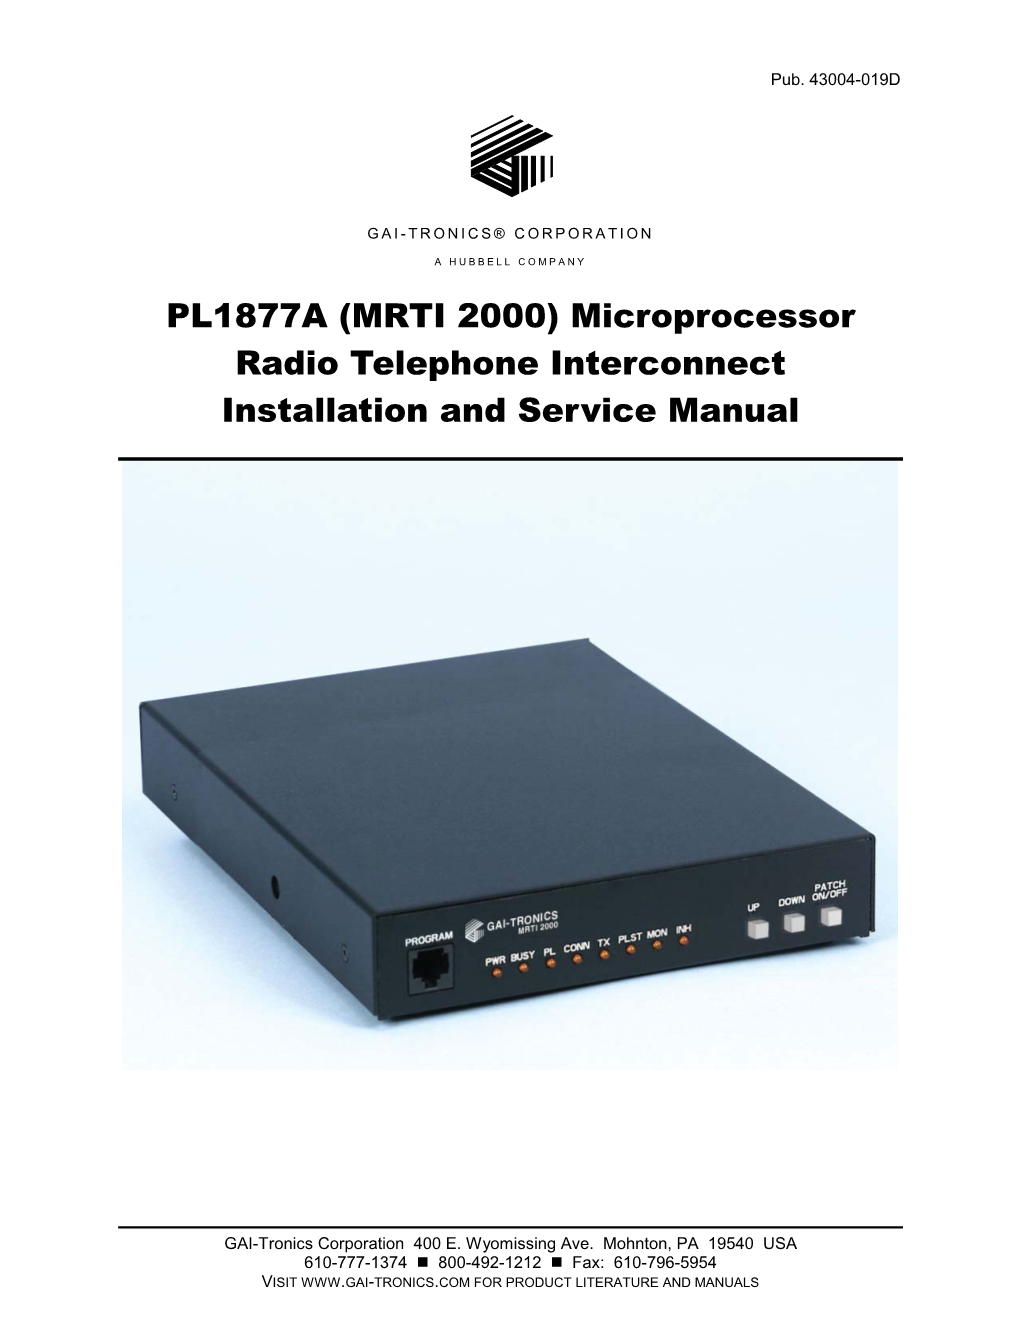 PL1877A (MRTI 2000) Microprocessor Radio Telephone Interconnect Installation & Service Manual